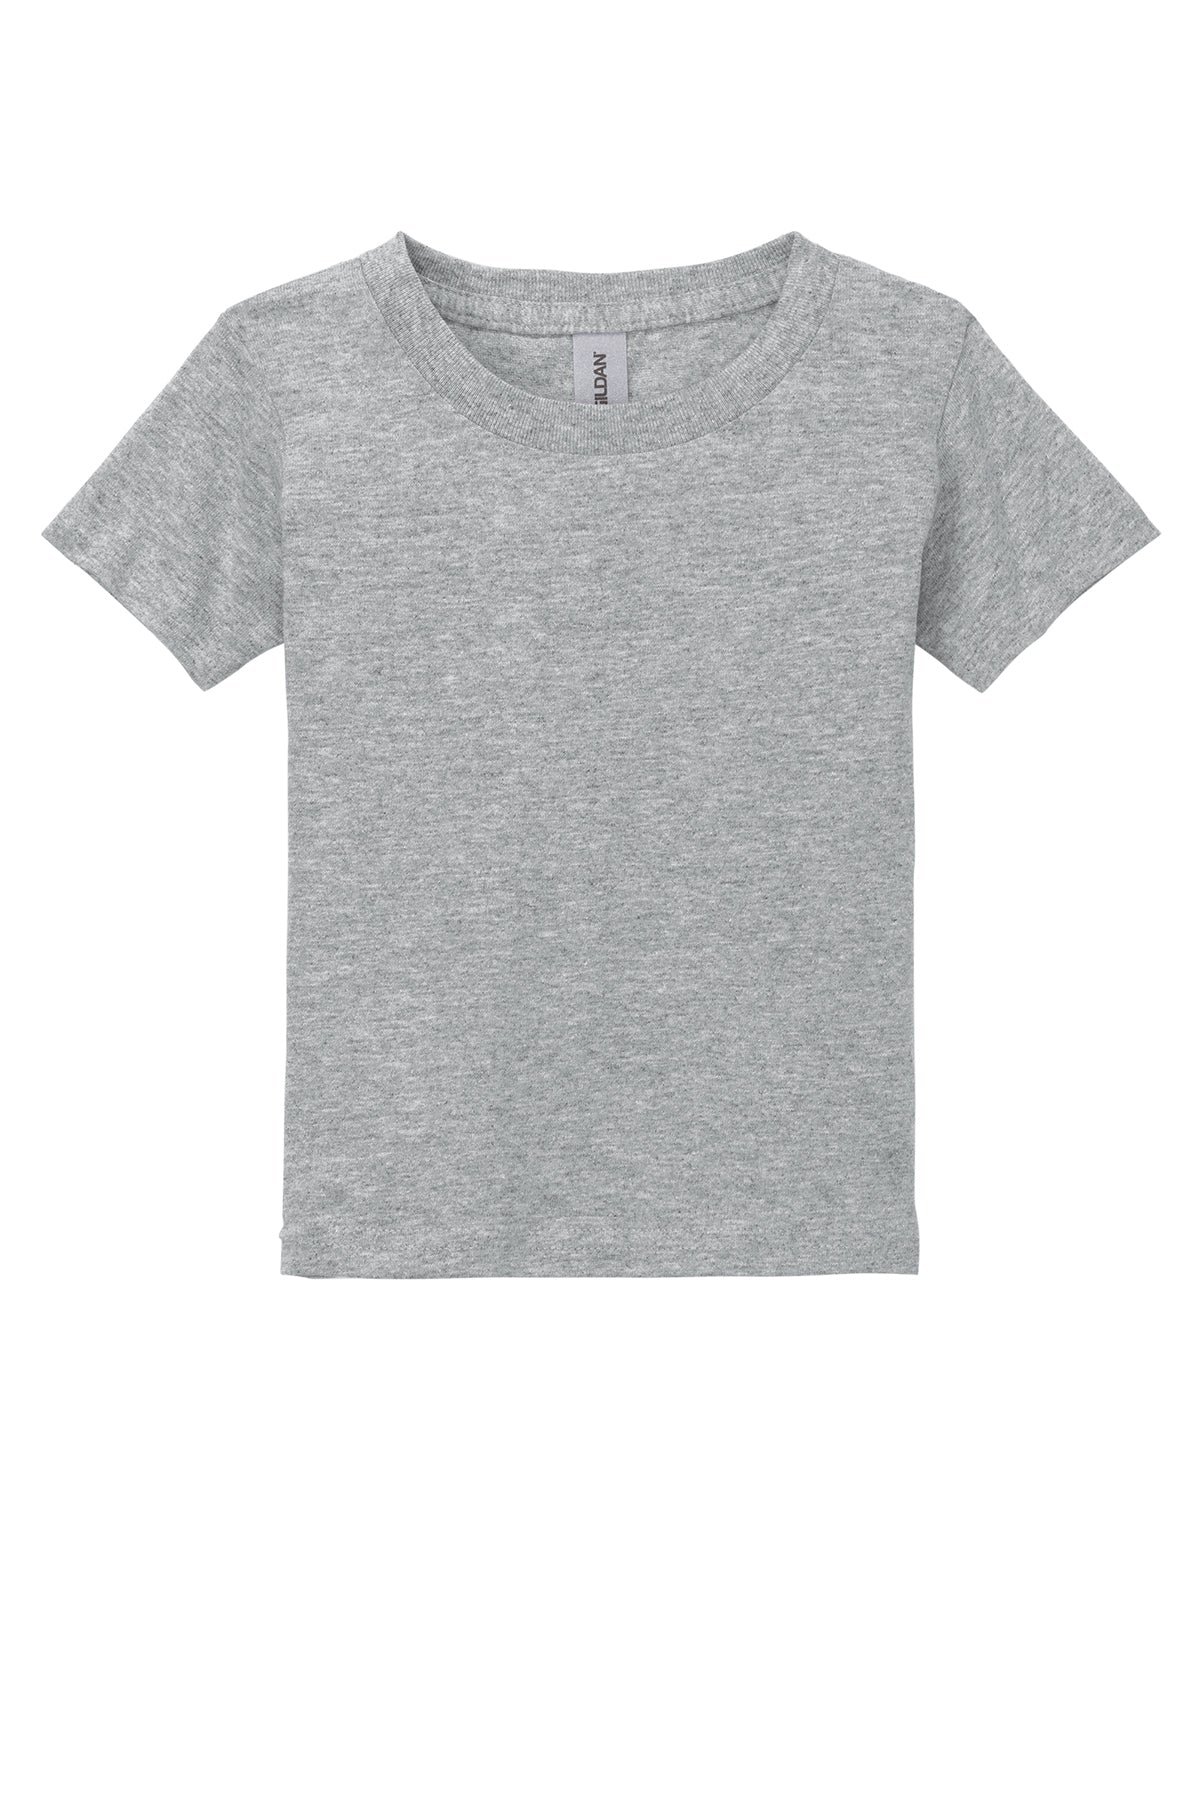 Gildan Toddler 100% Cotton Short Sleeve Shirts Sport Grey